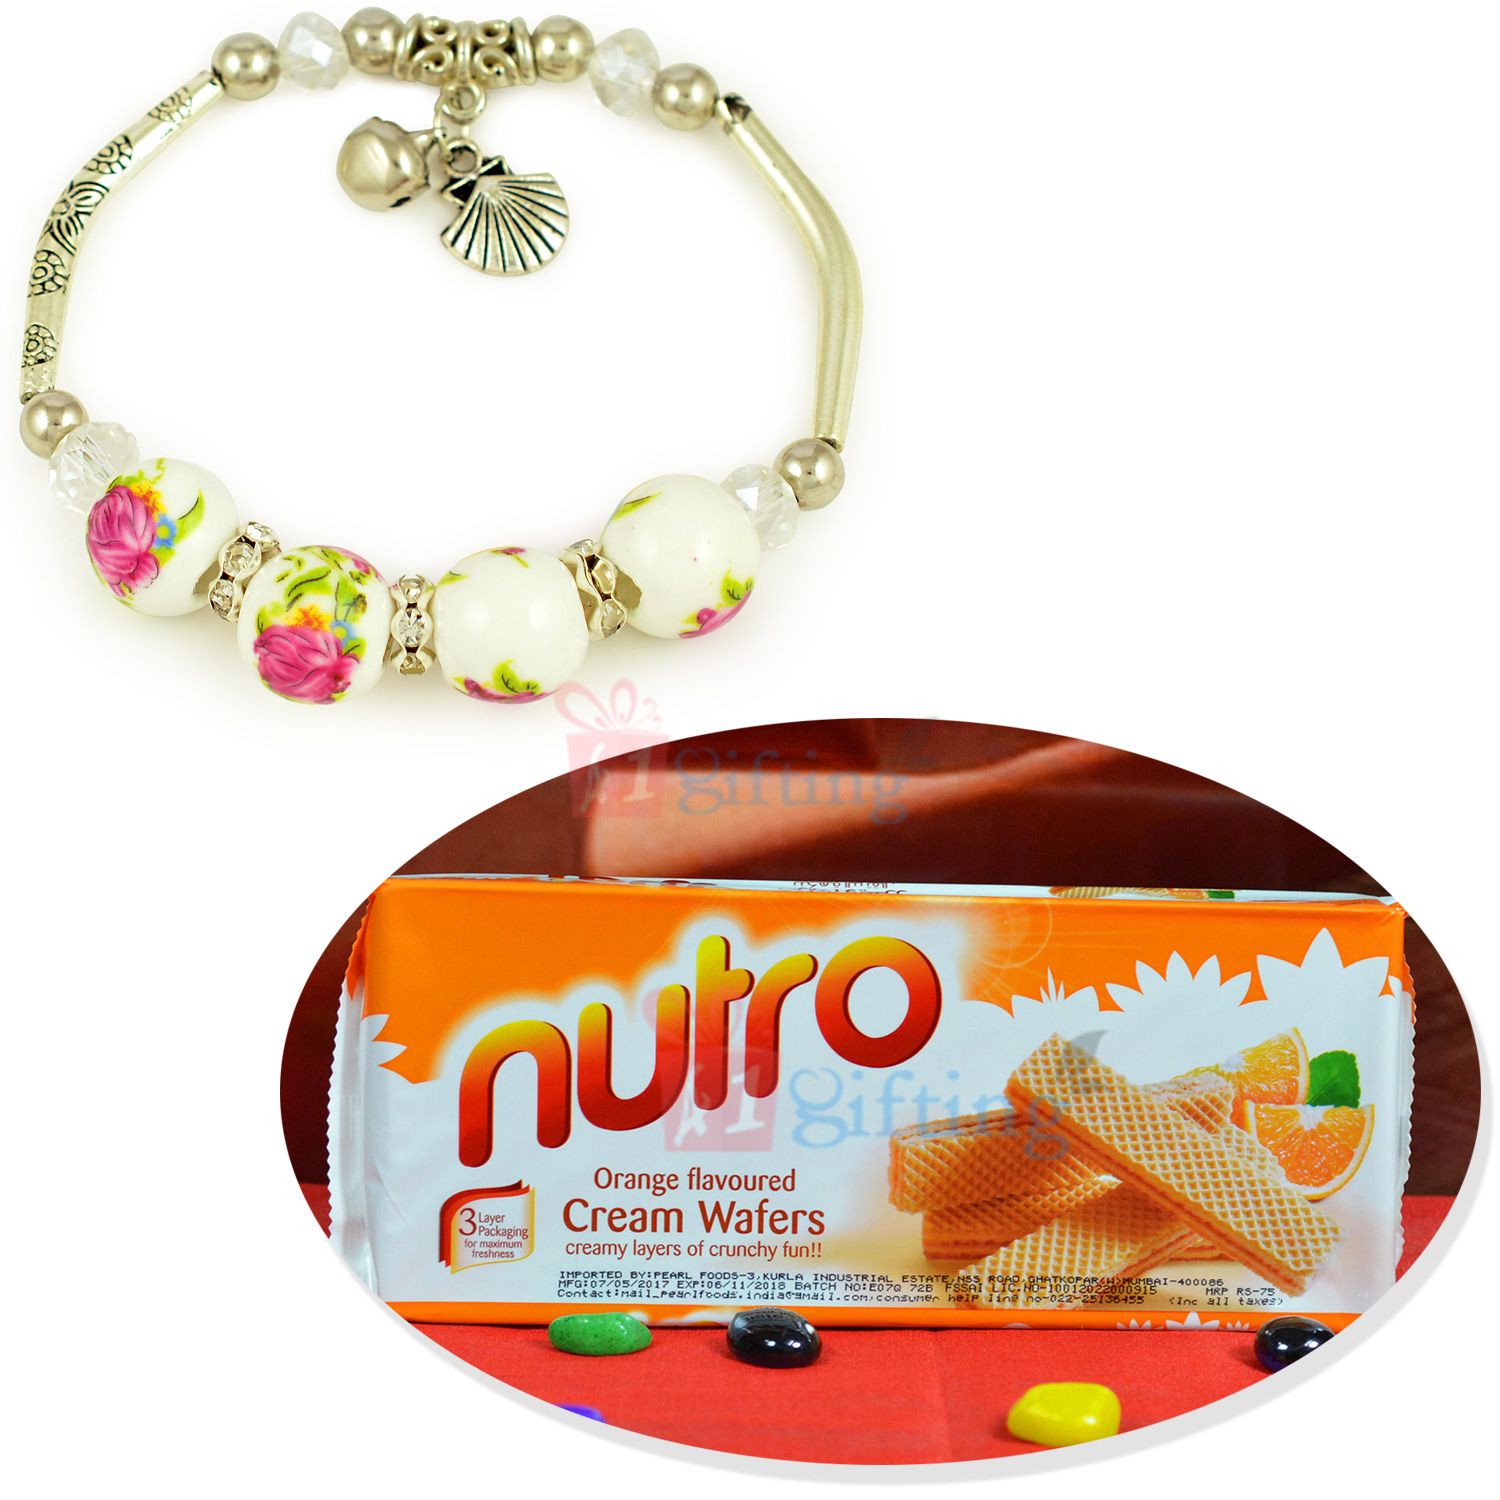 Nutro Orange Flavured Cream Wafers with Cats Eye Bracelet